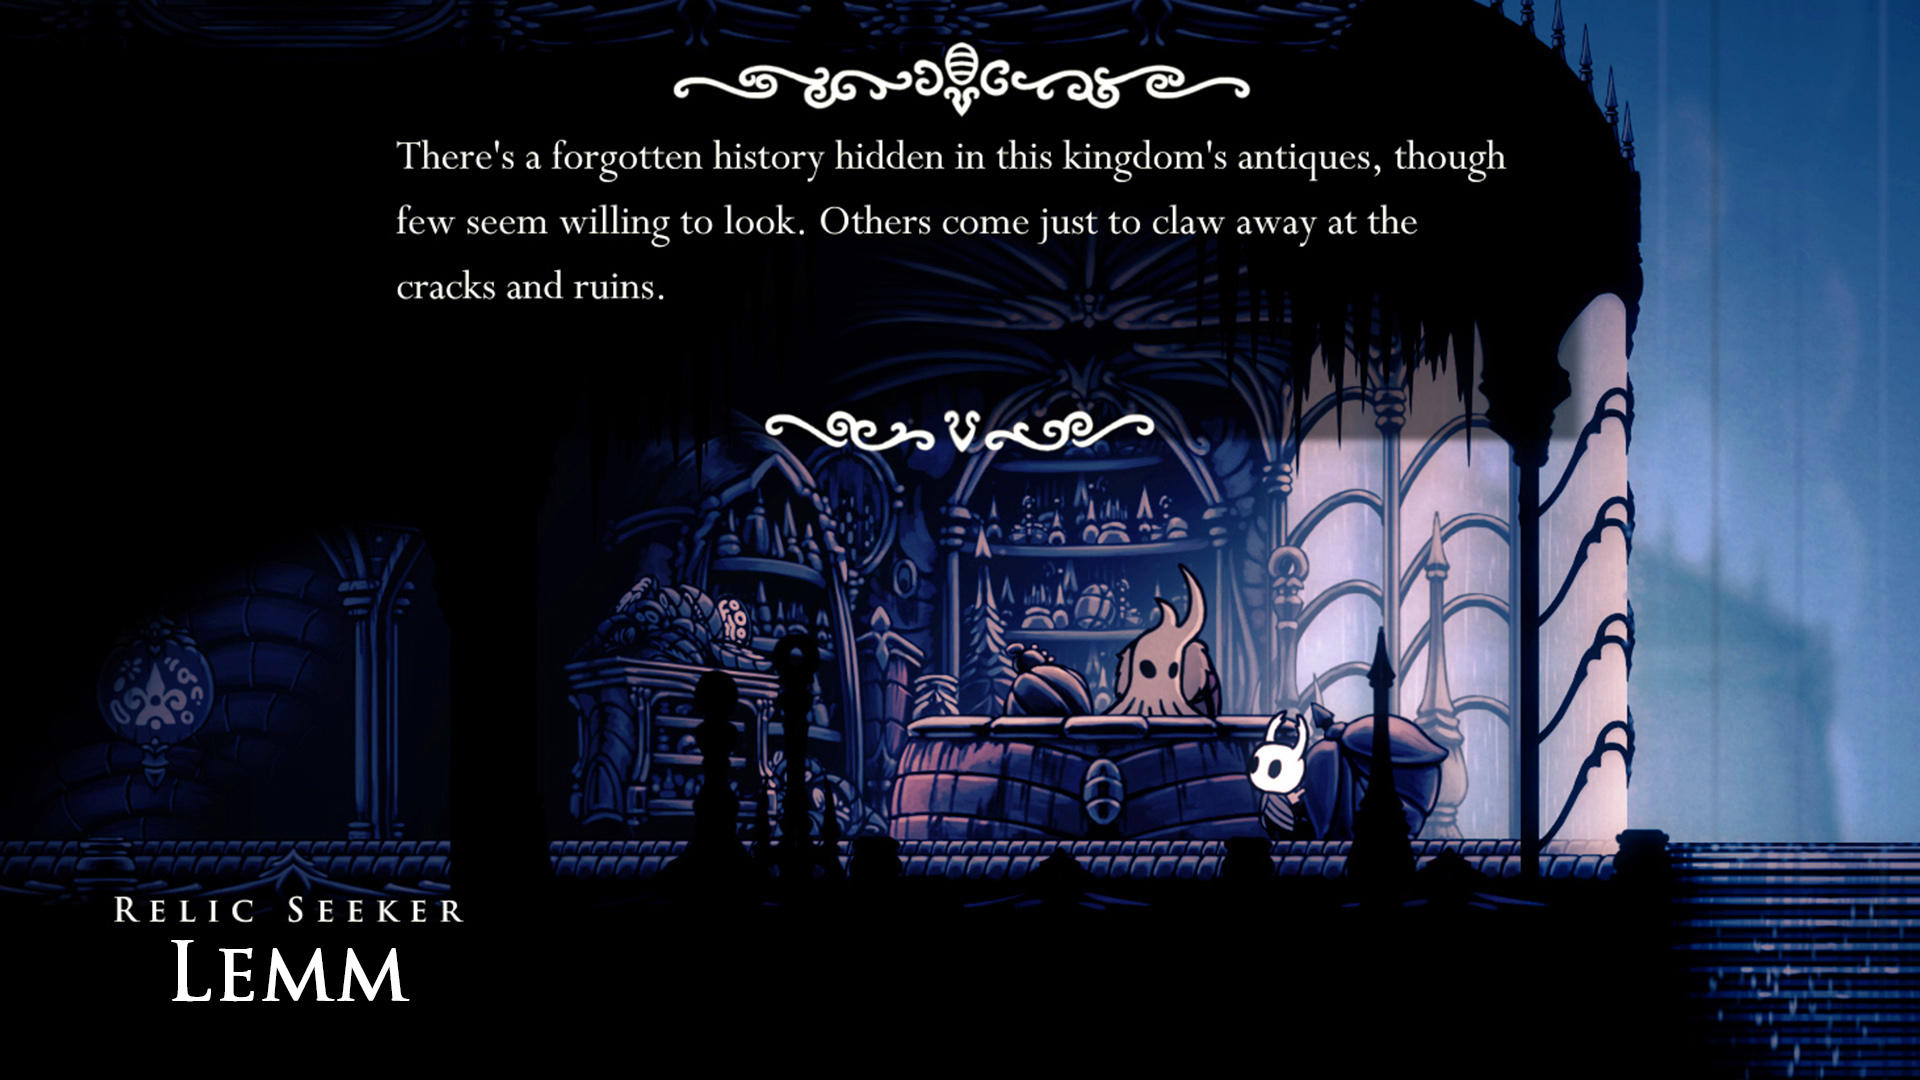 Screenshot of Hollow Knight